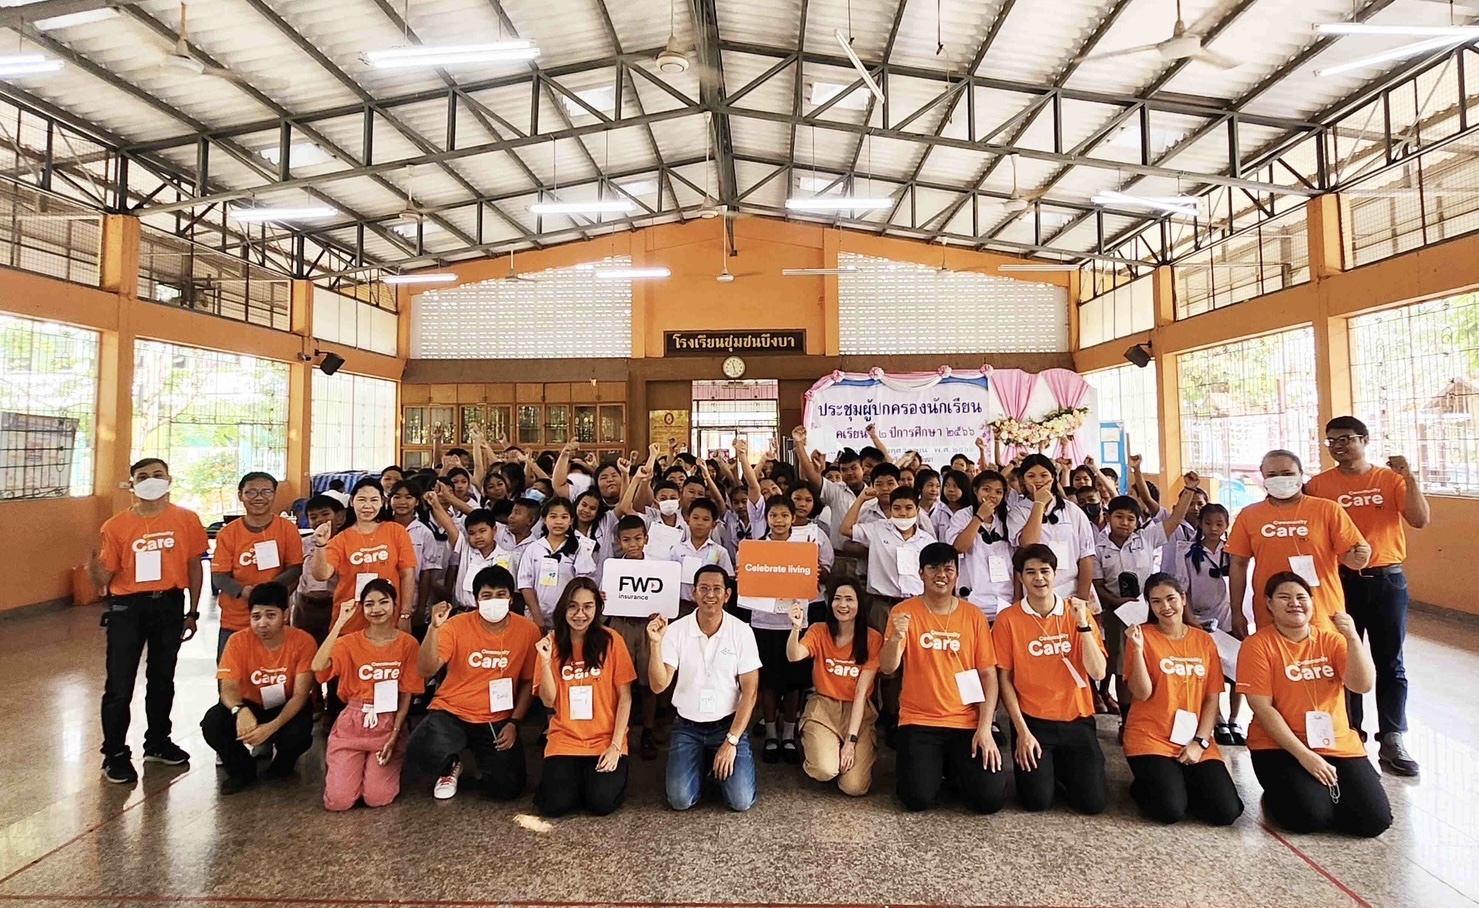 FWD ประกันชีวิต ร่วมกับ มูลนิธิจูเนียร์อะชีฟเม้นท์ ประเทศไทยลงพื้นที่จัดเวิร์กช็อปส่งเสริมความรู้ทางการเงินแก่เยาวชนโรงเรียนชุมชนบึงบา จังหวัดปทุมธานี